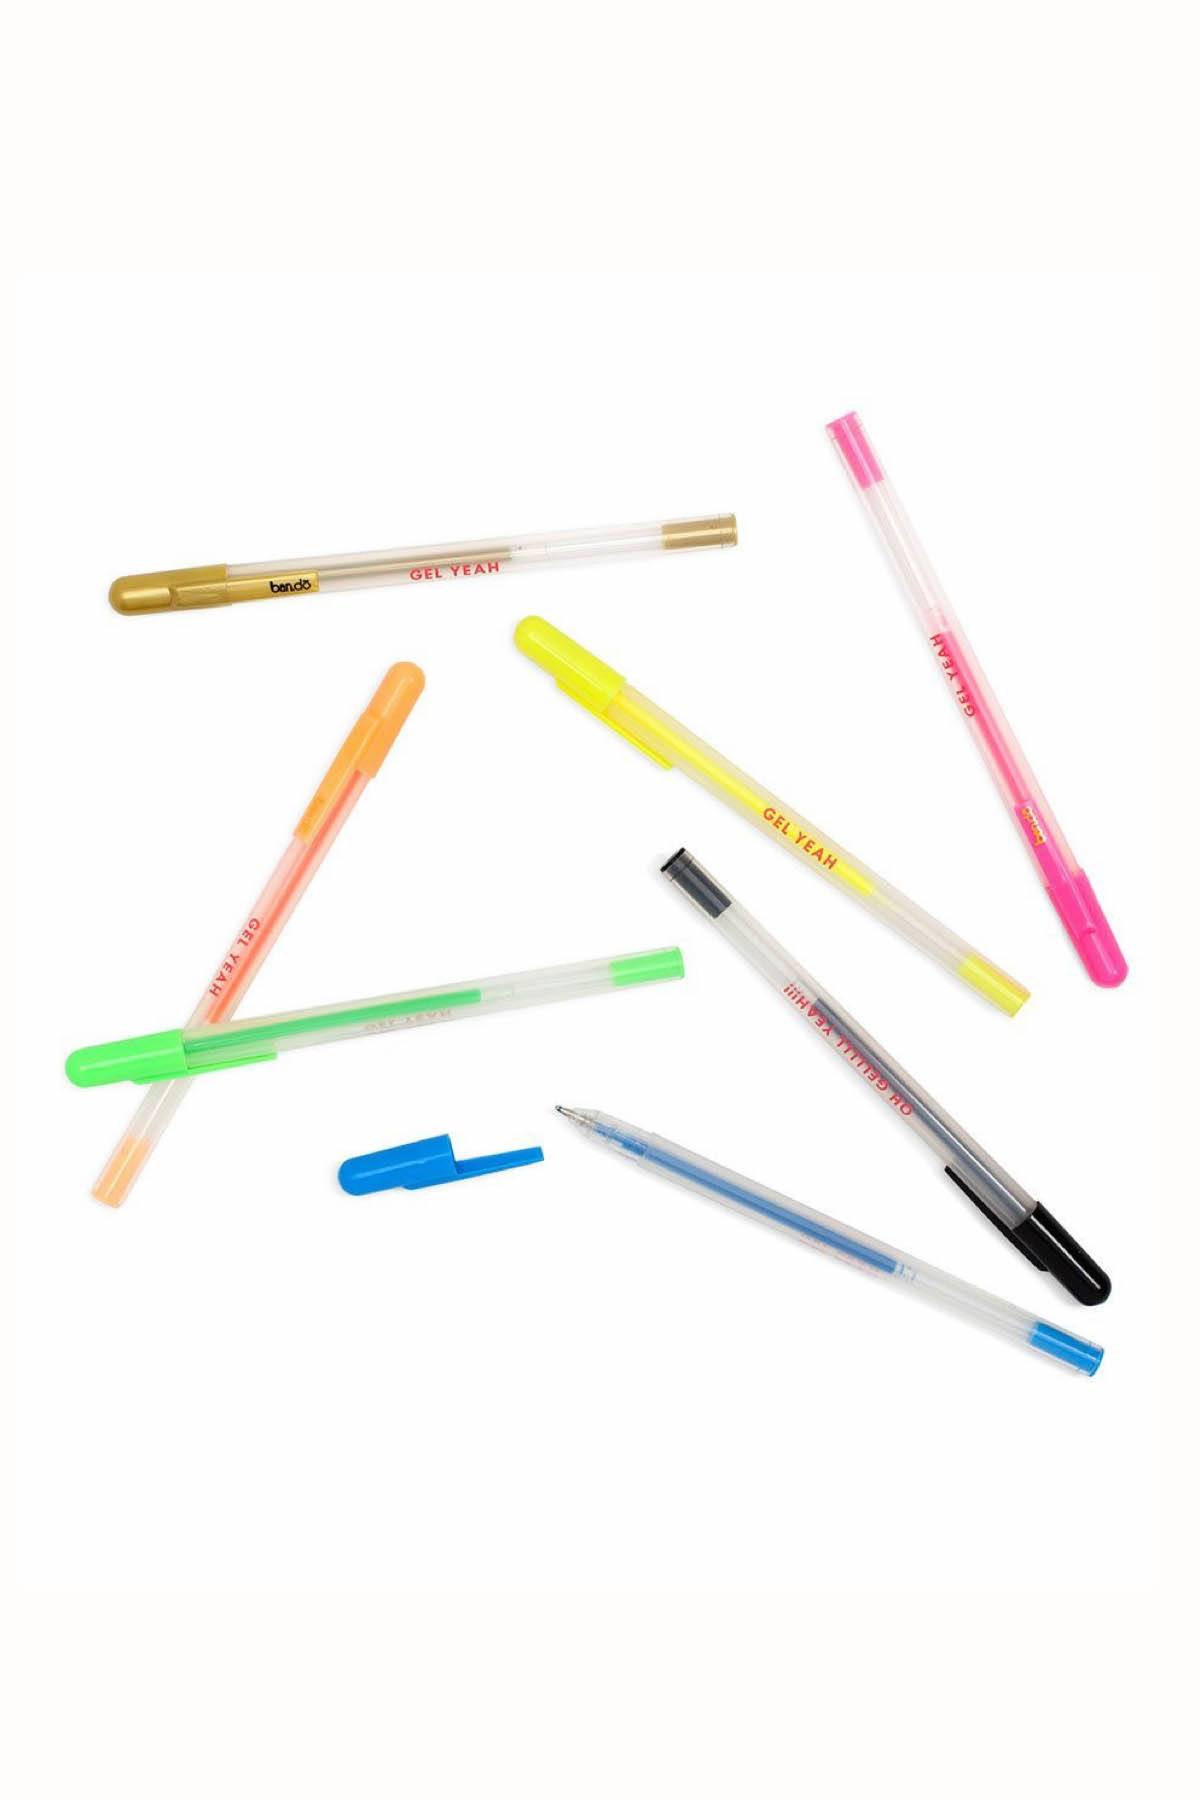 Ban.do Multi-Color GEL YEAH 7 Gel Pen Set